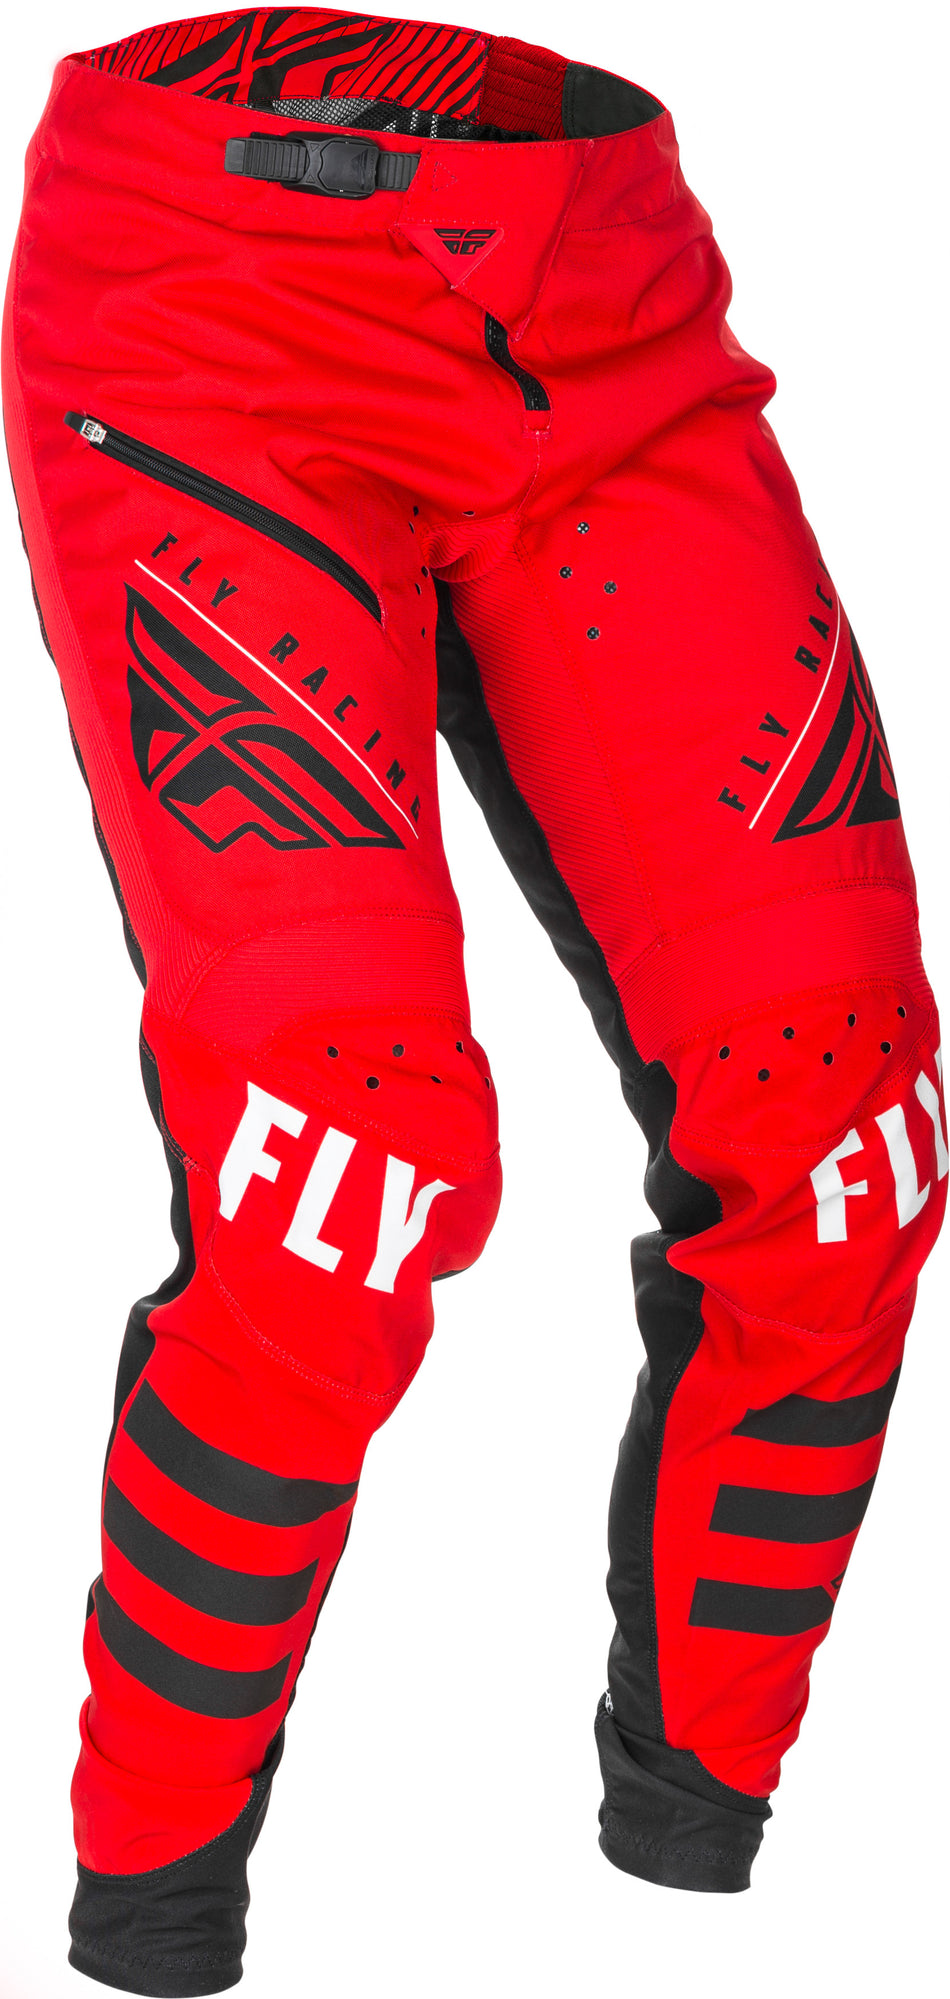 FLY RACING Kinetic Bicycle Pants Red/Black Sz 38 373-04238